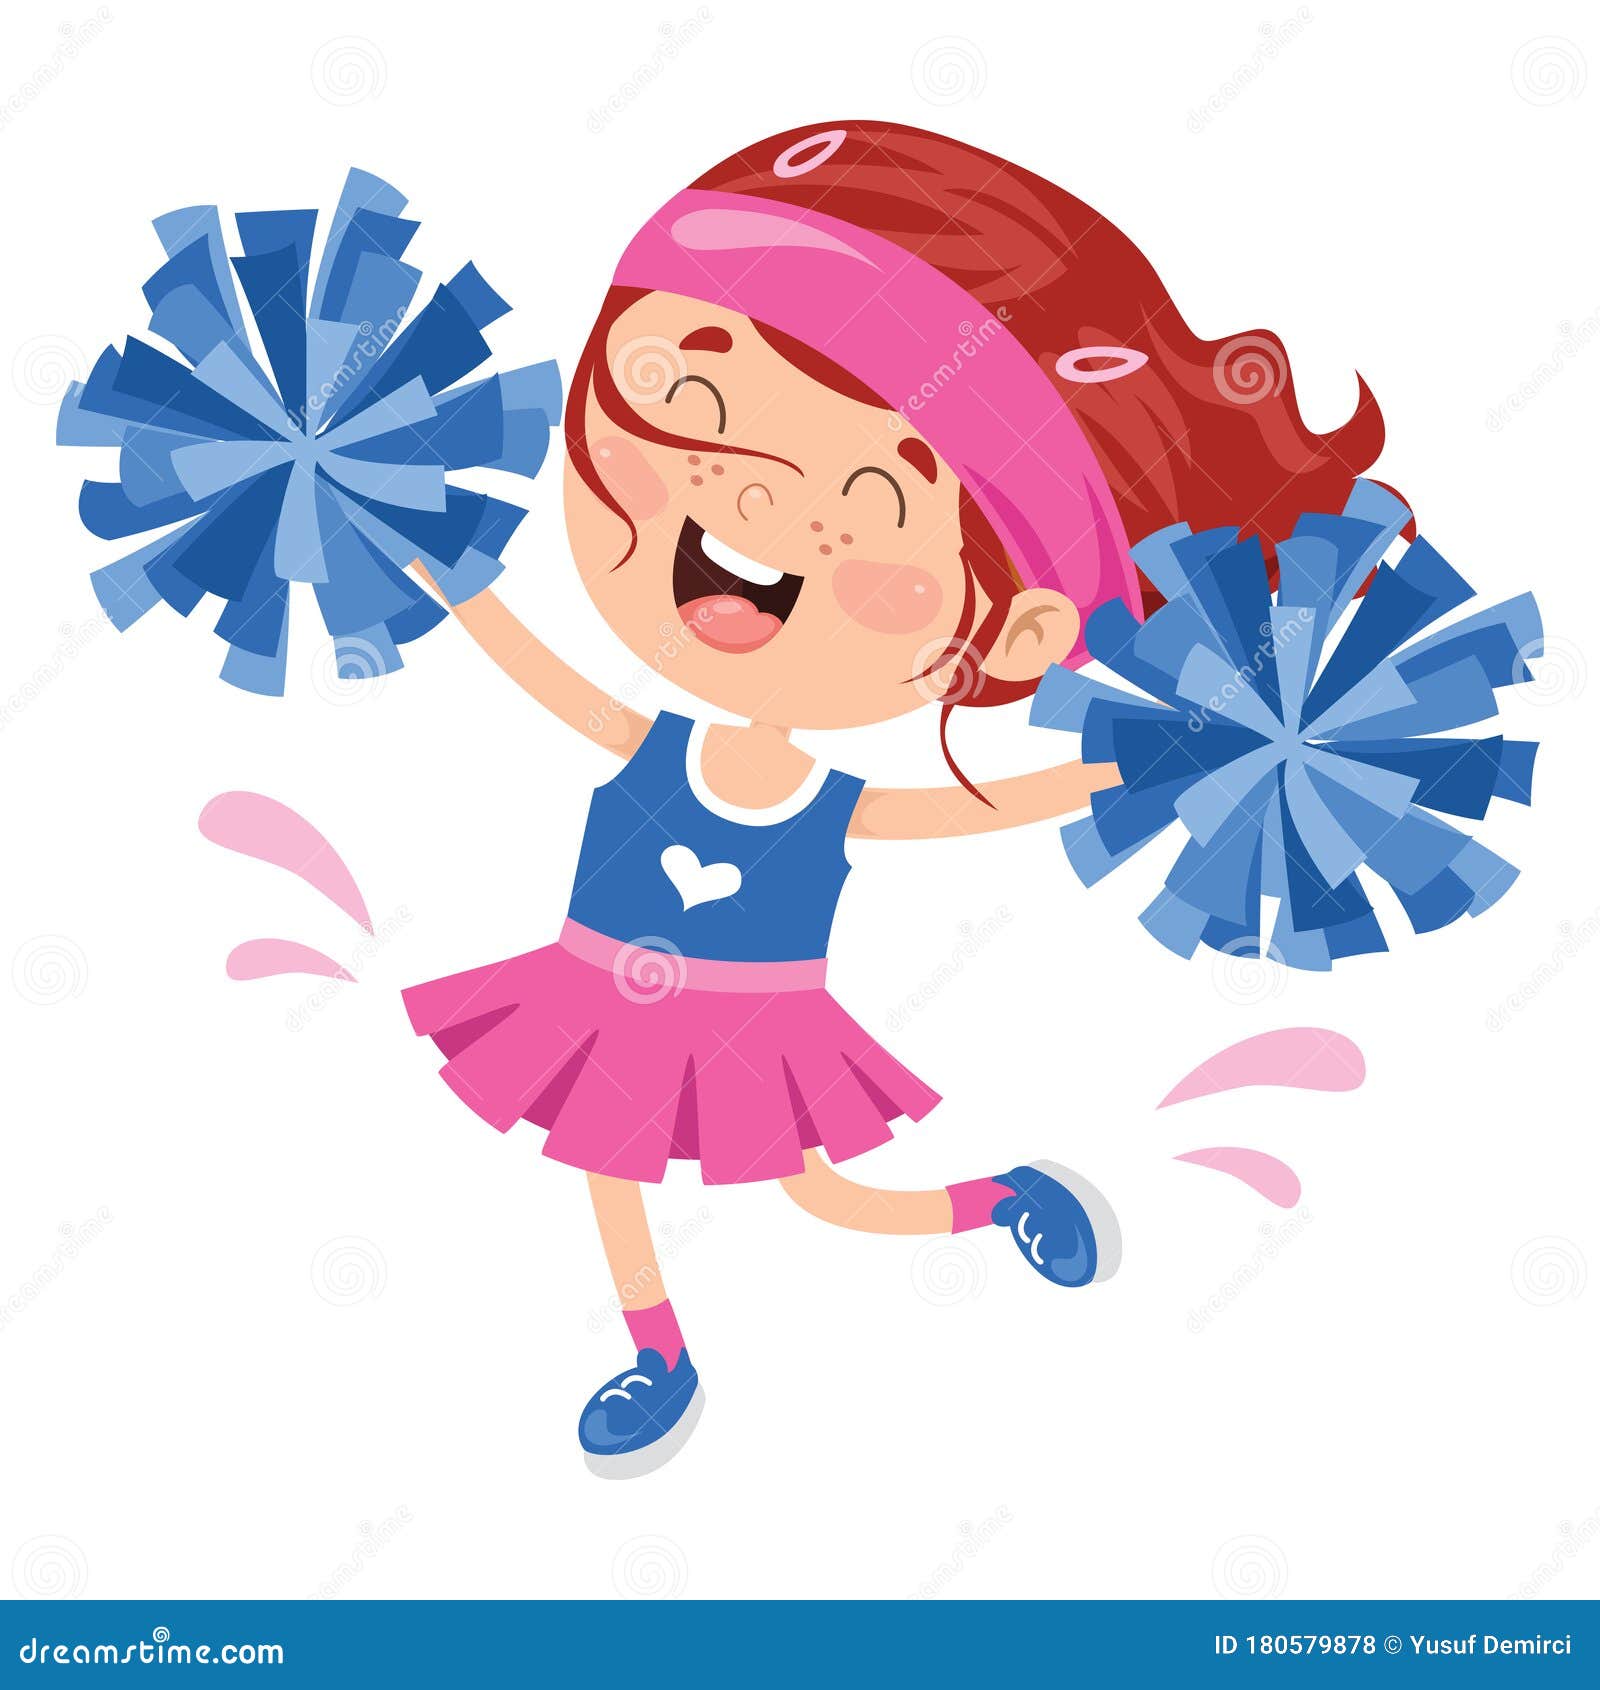 Cheerleader cartoon with pom poms Royalty Free Vector Image